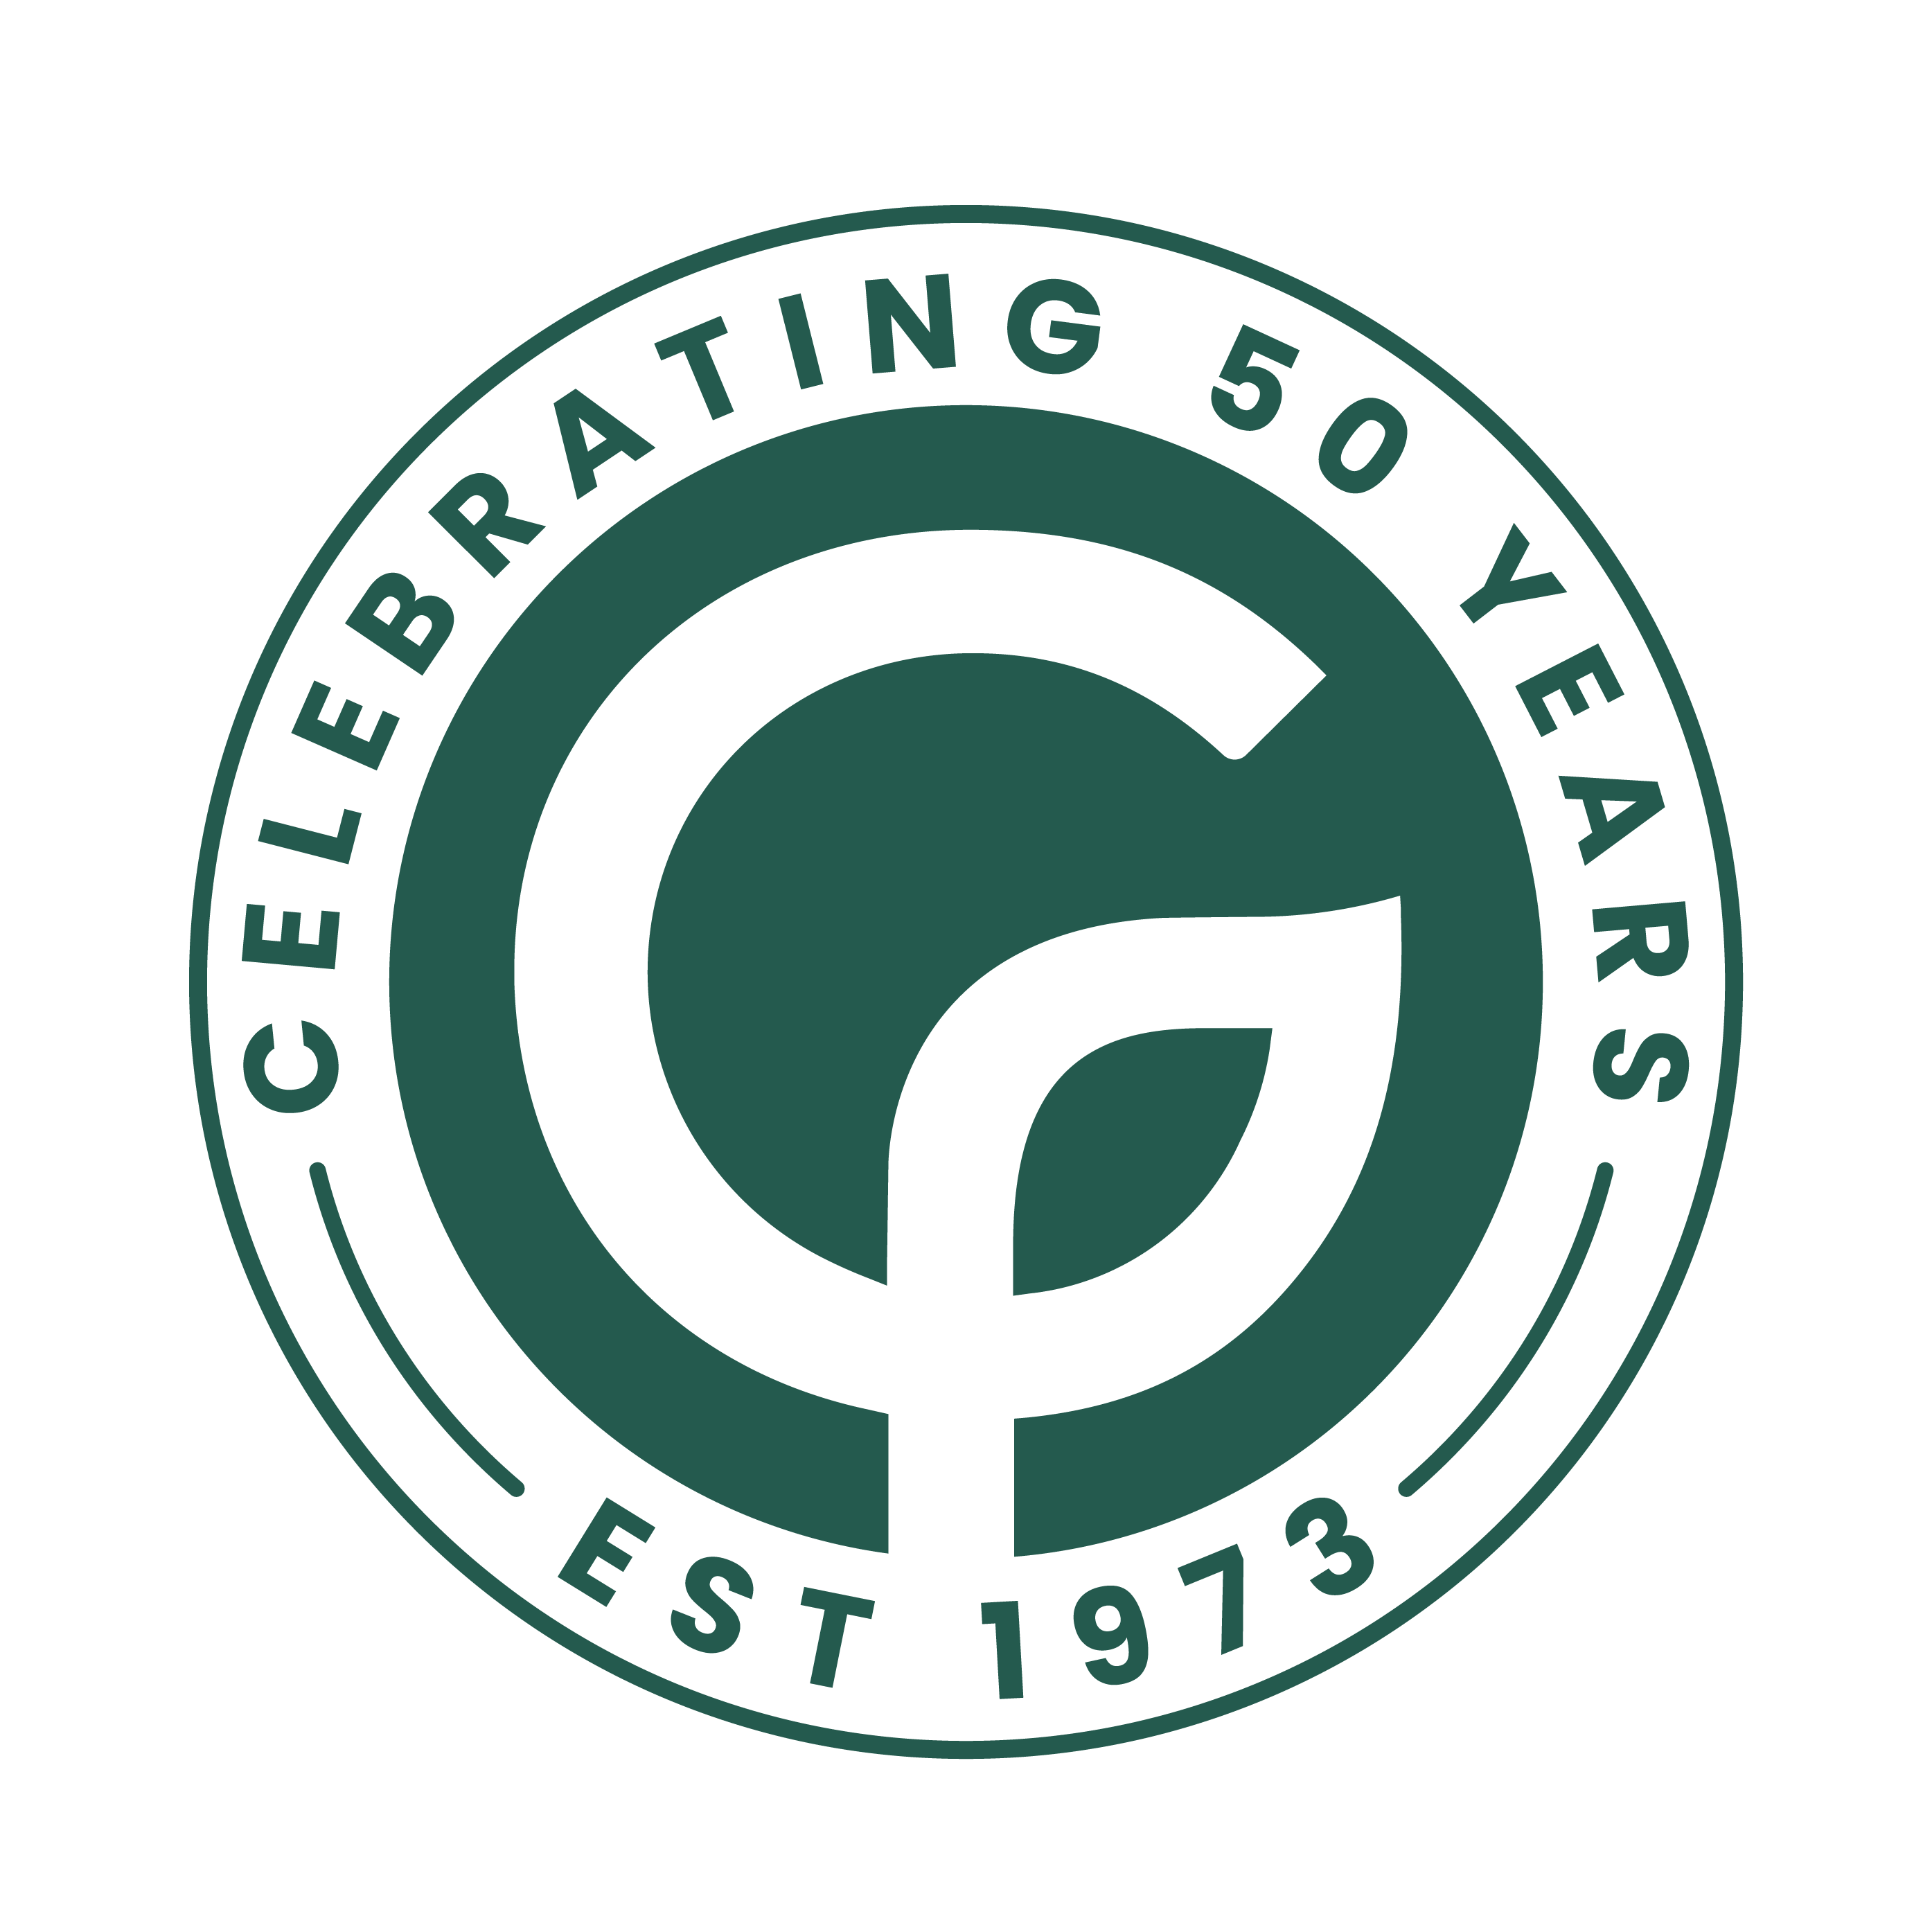 GFW-50-logo_seal-solid-ever-green